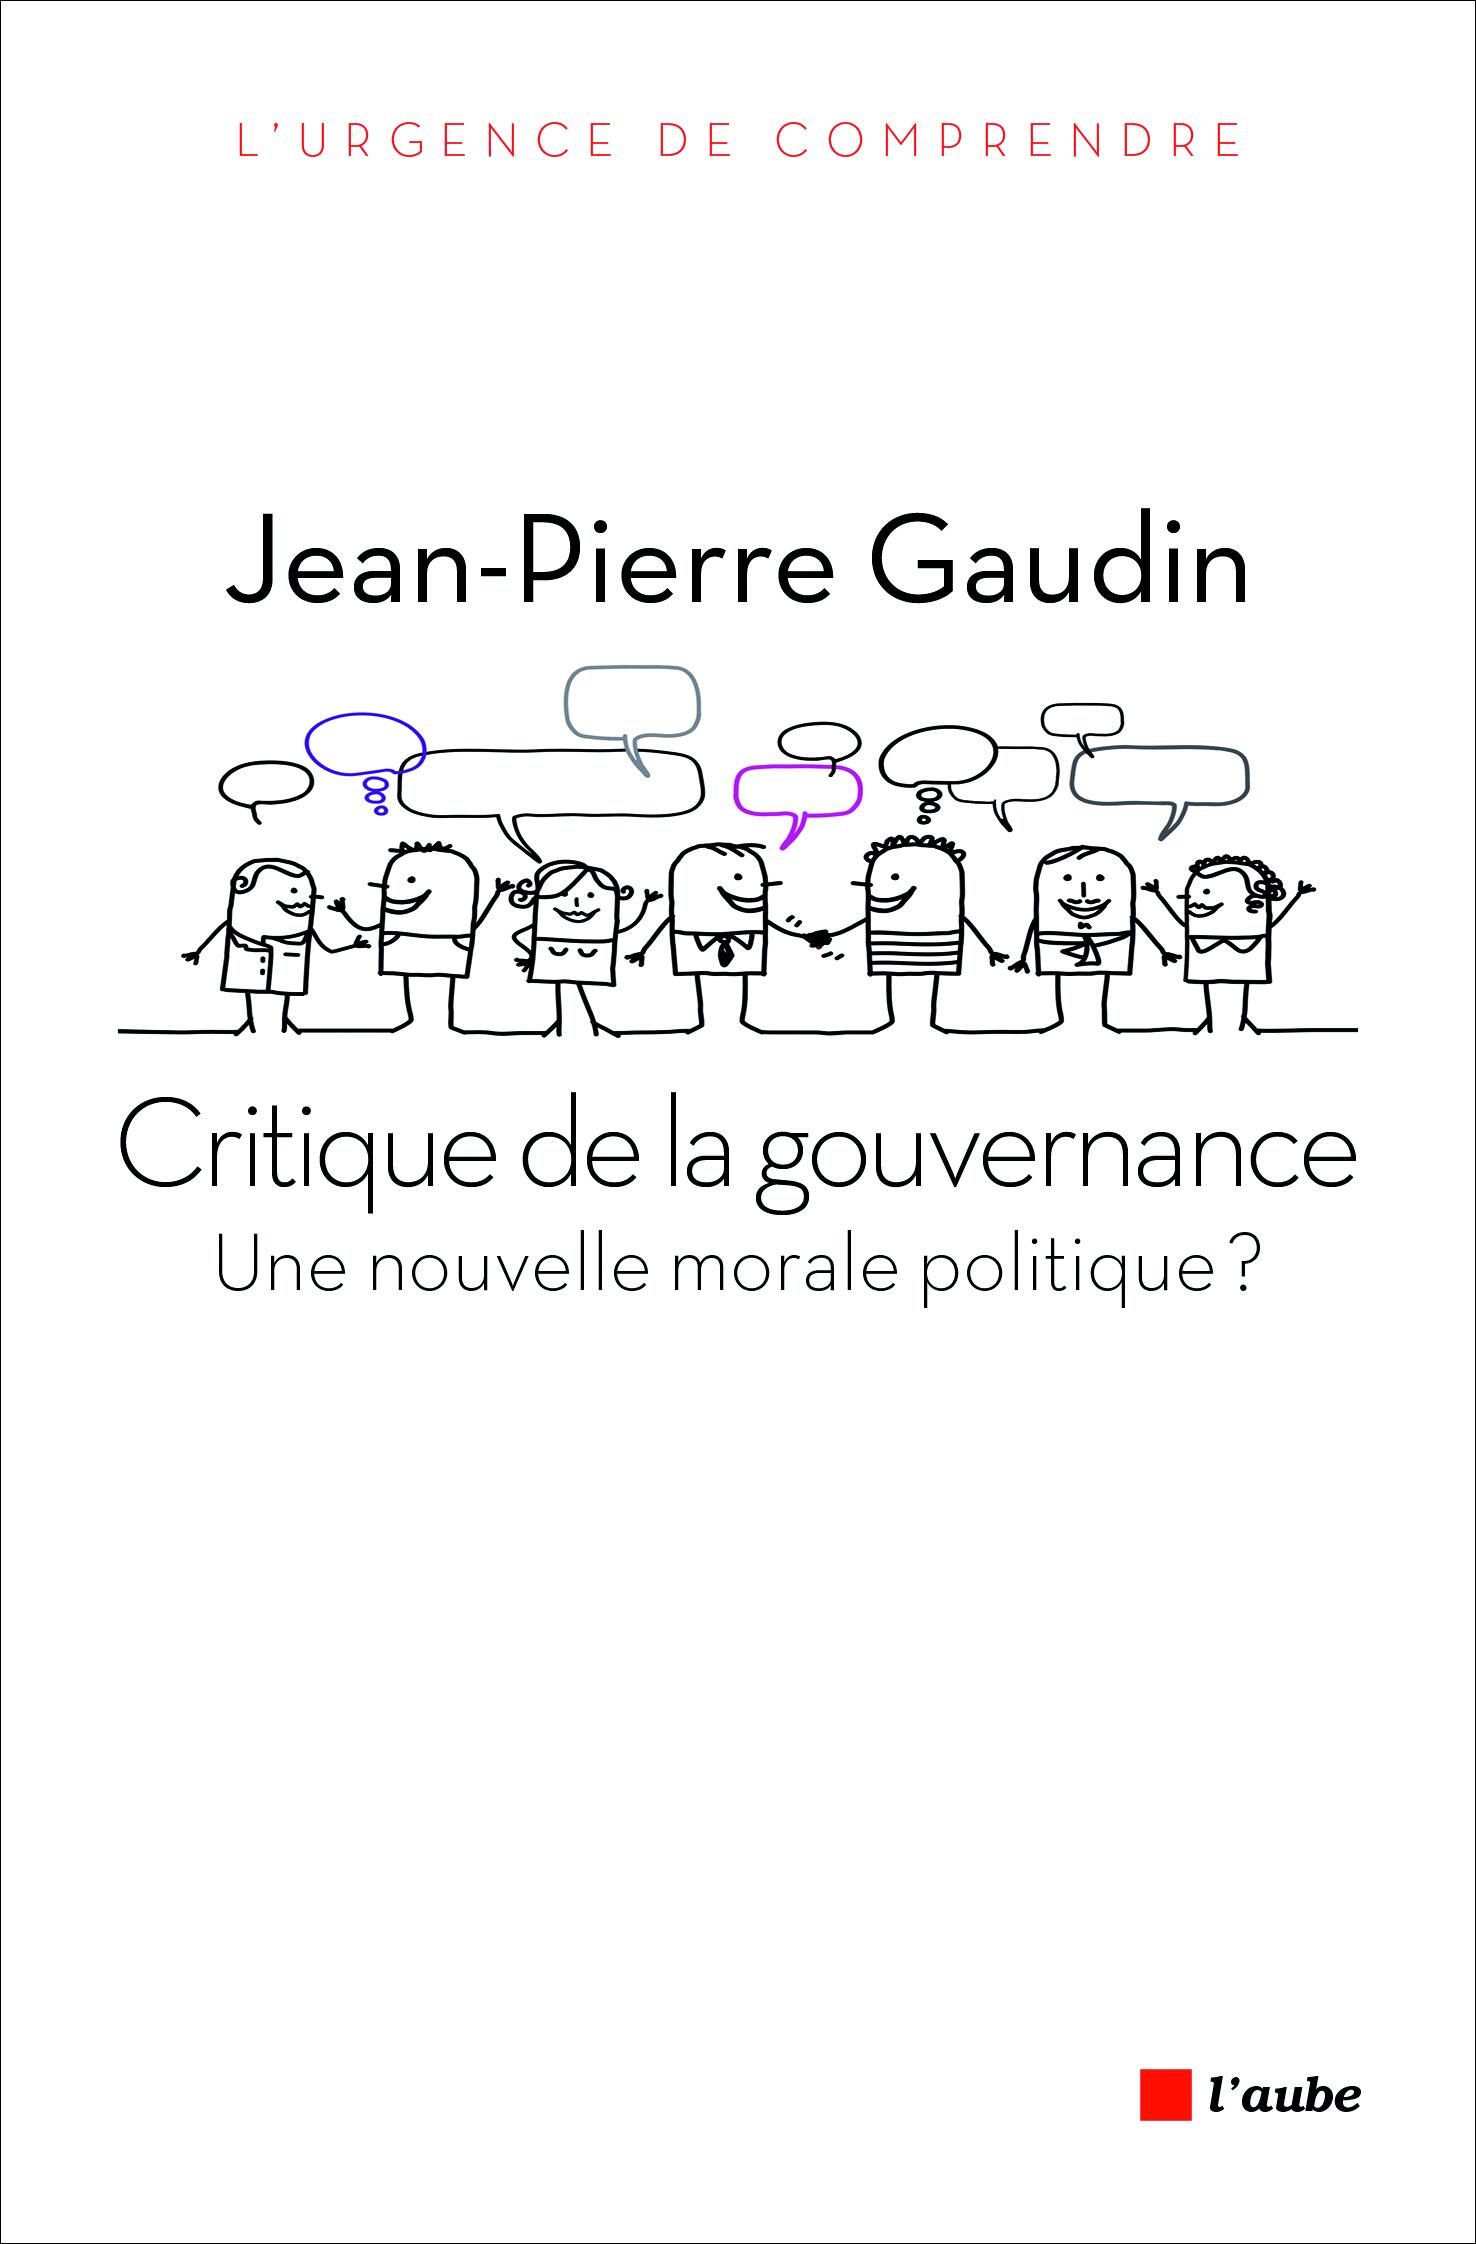 Critique of governance 